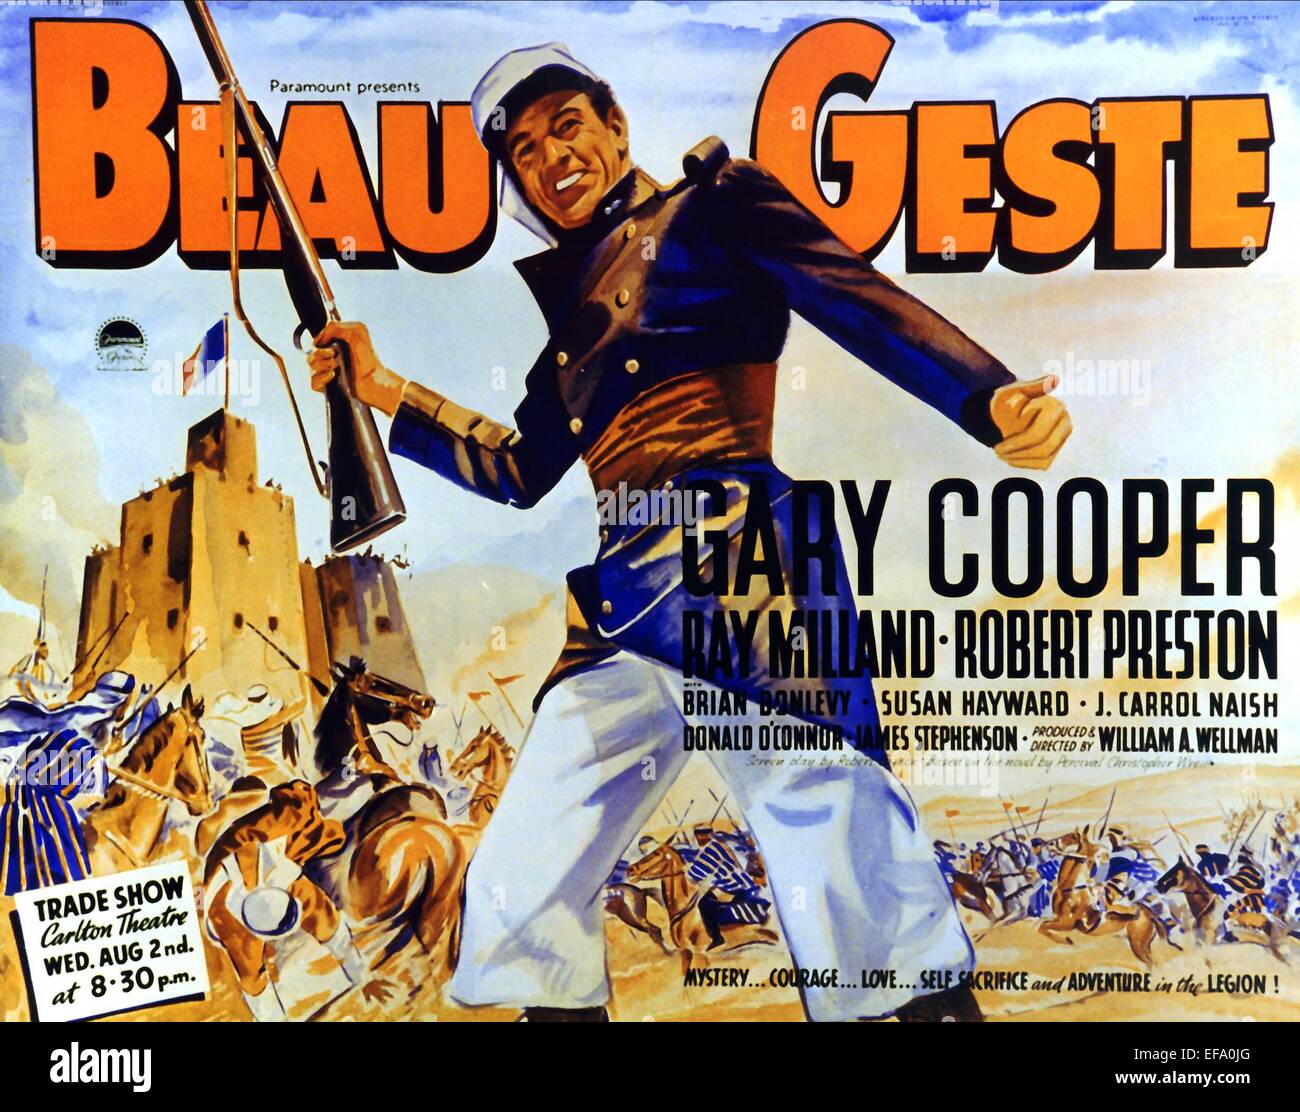 GARY COOPER POSTER BEAU GESTE (1939) Stock Photo